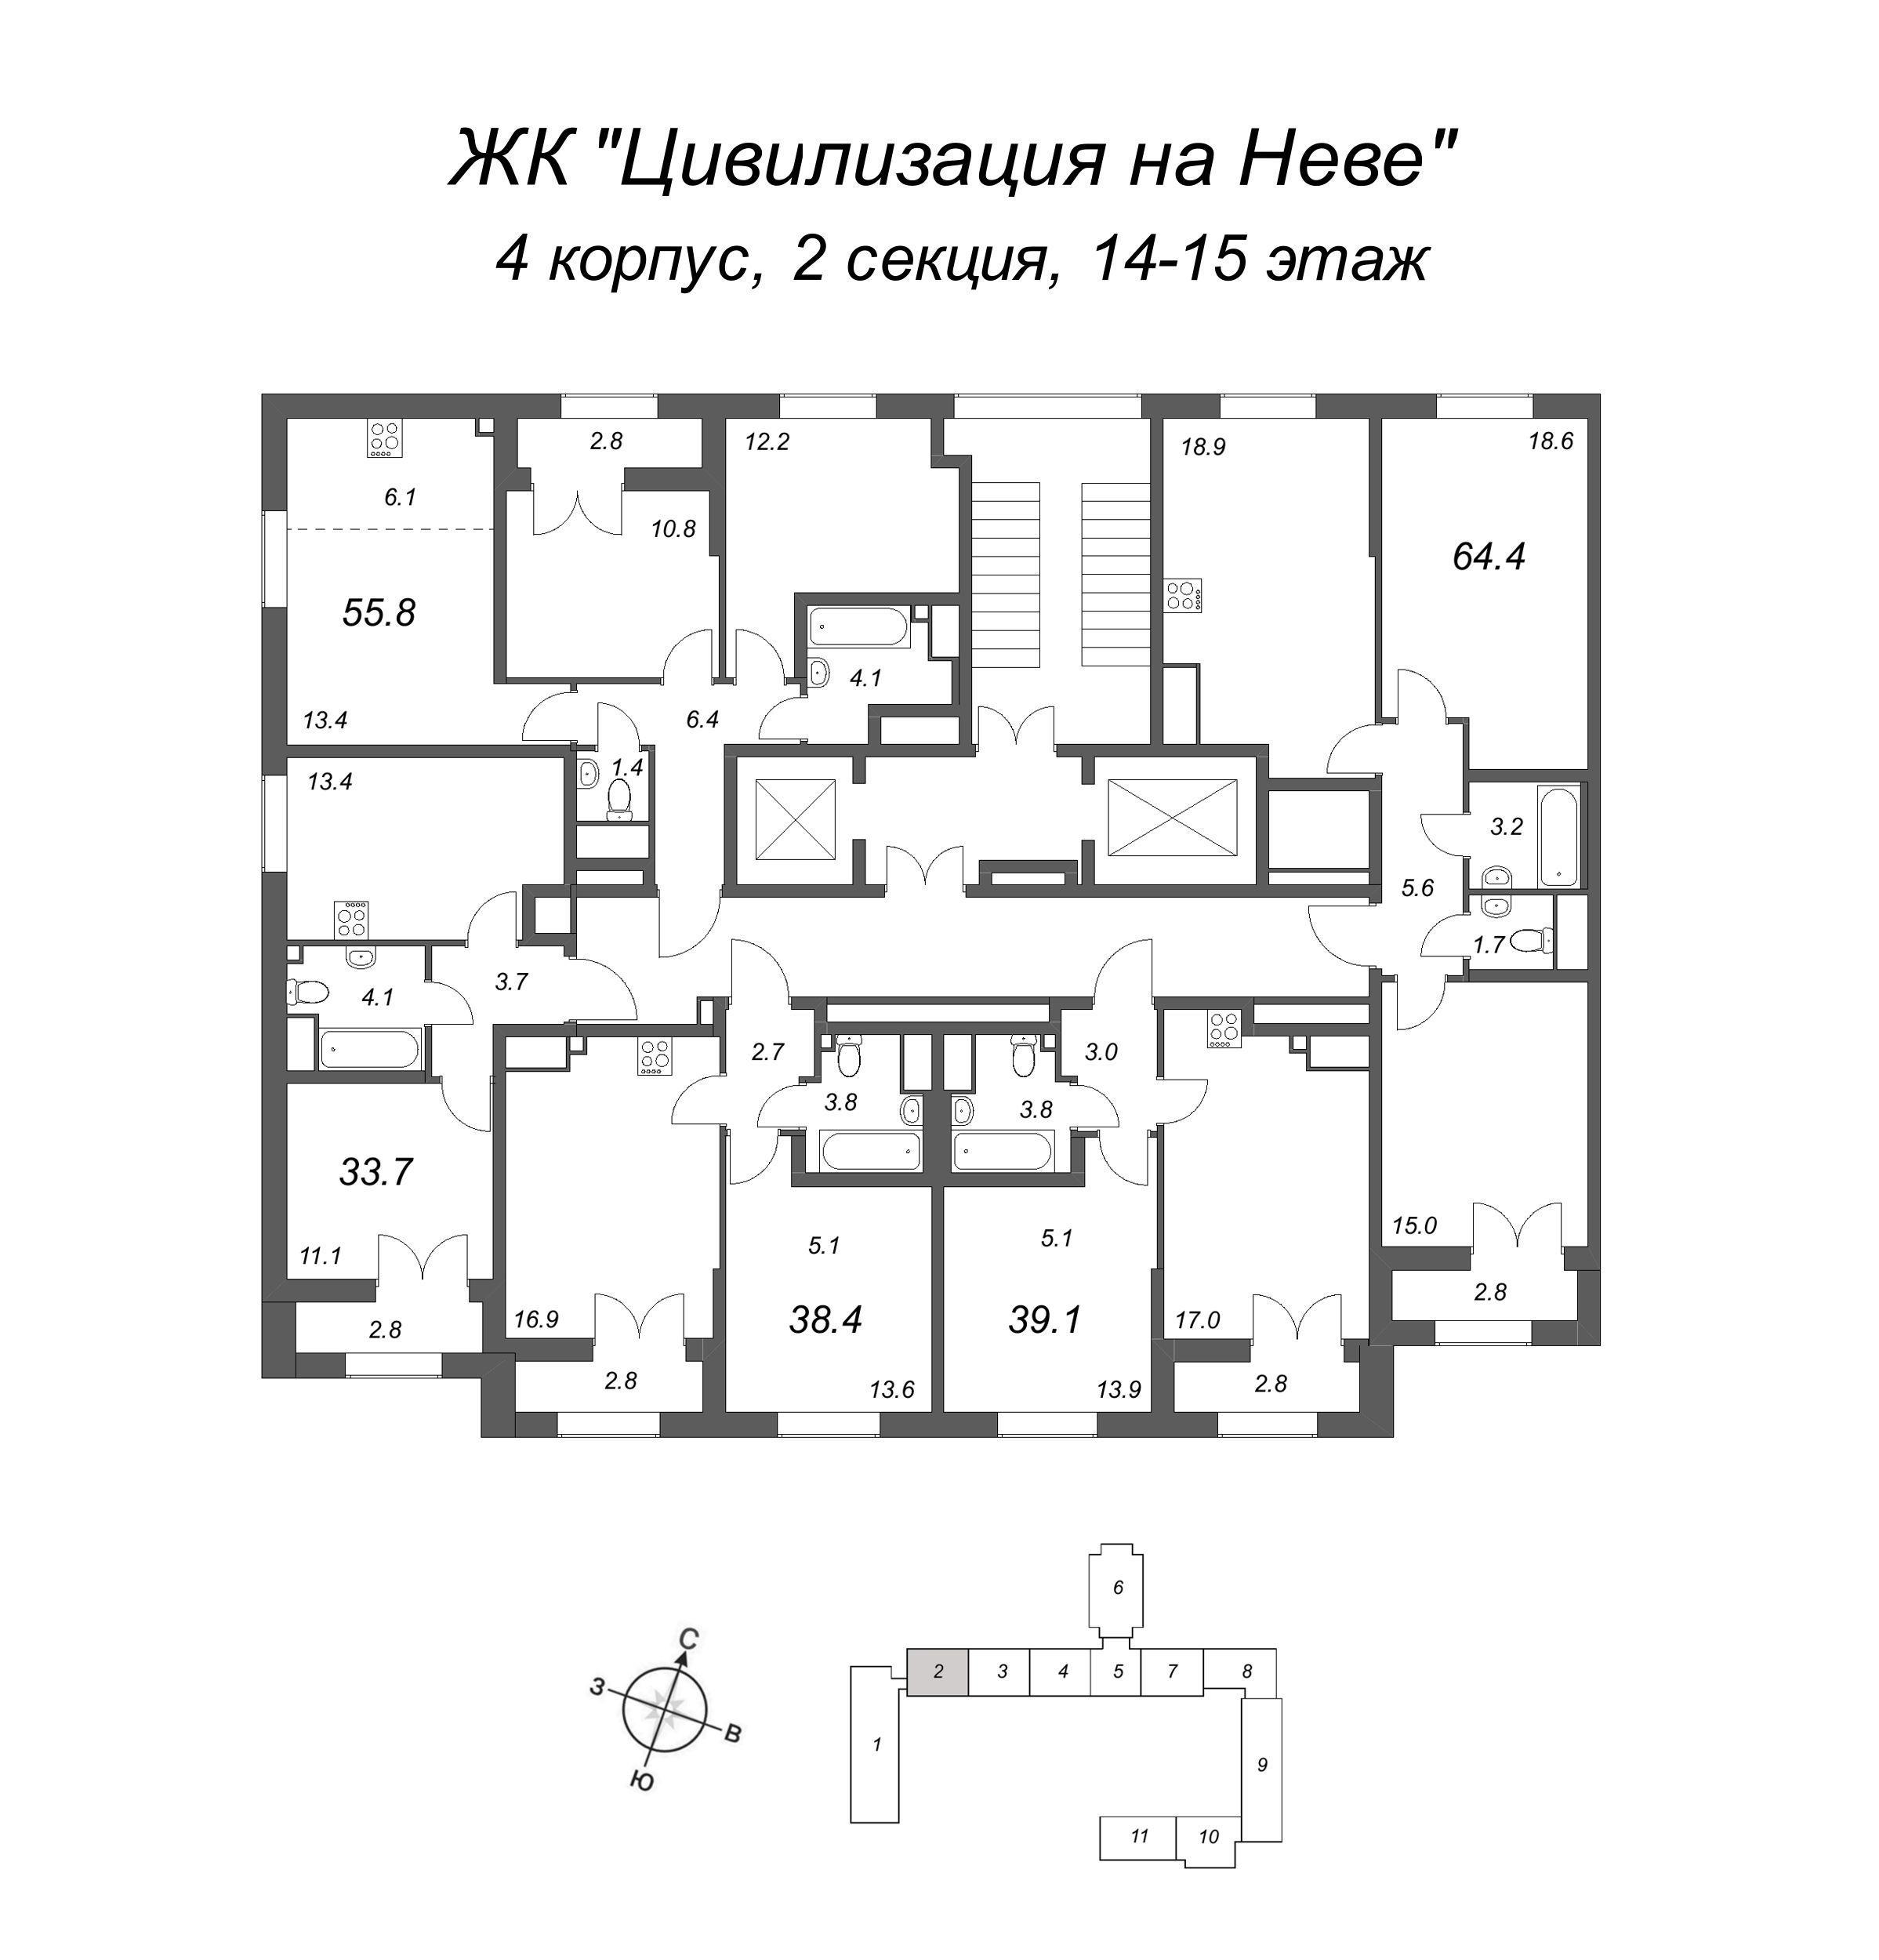 3-комнатная (Евро) квартира, 64.4 м² - планировка этажа